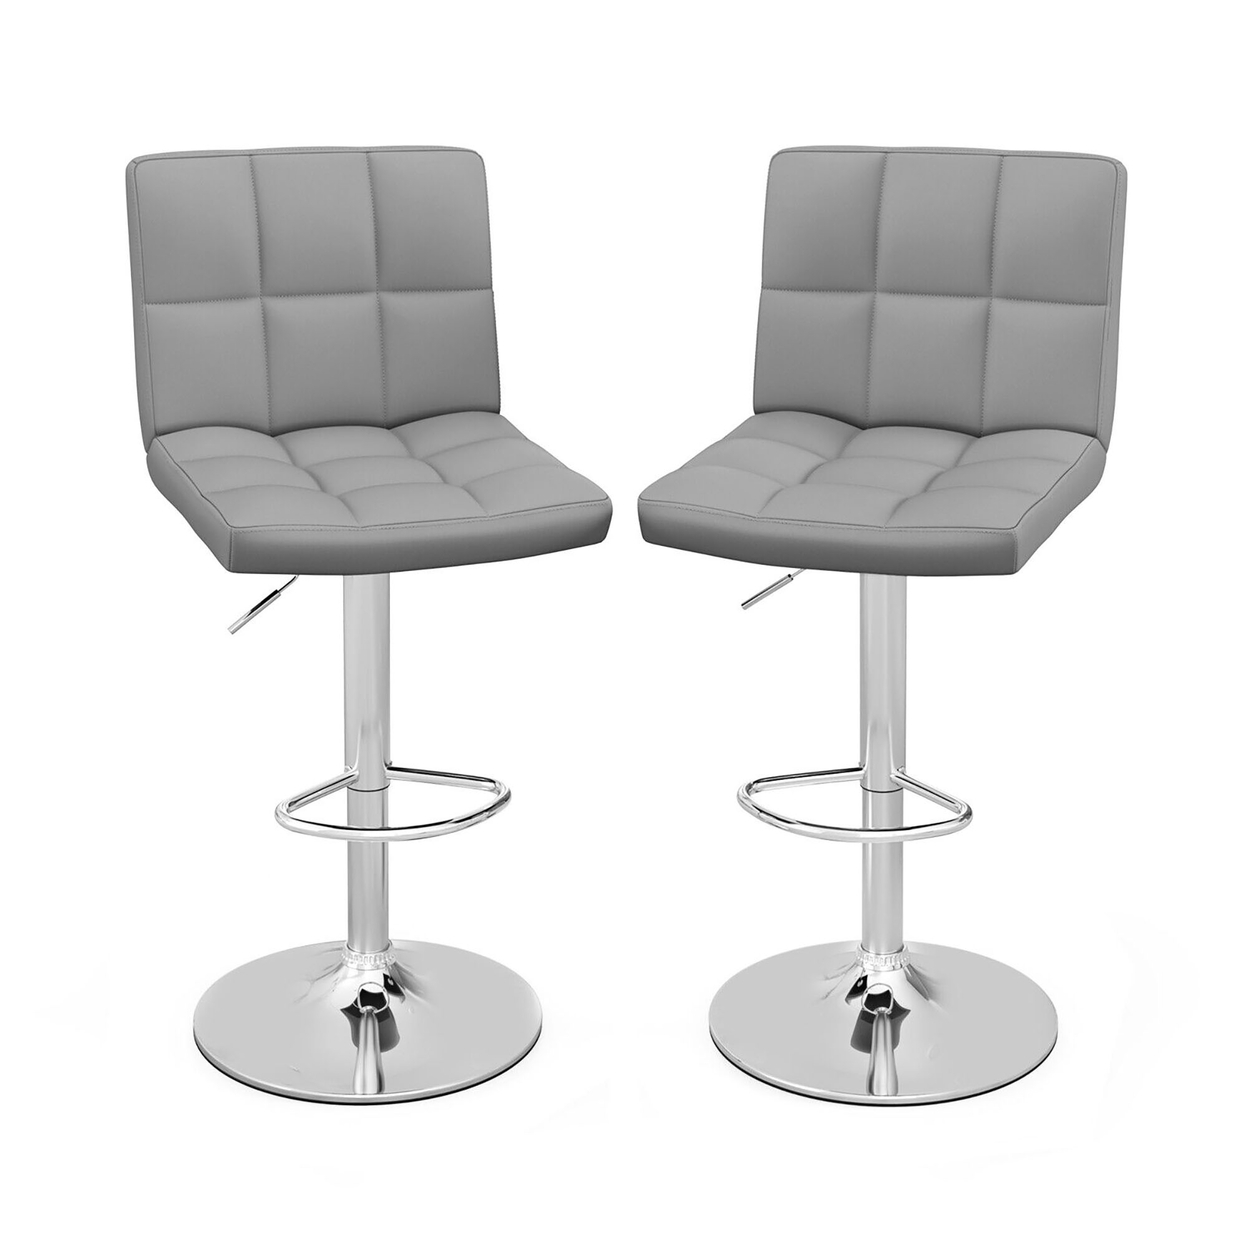 Set Of 2 Adjustable Swivel Bar Stool Counter Height Bar Chair PU Leather Grey